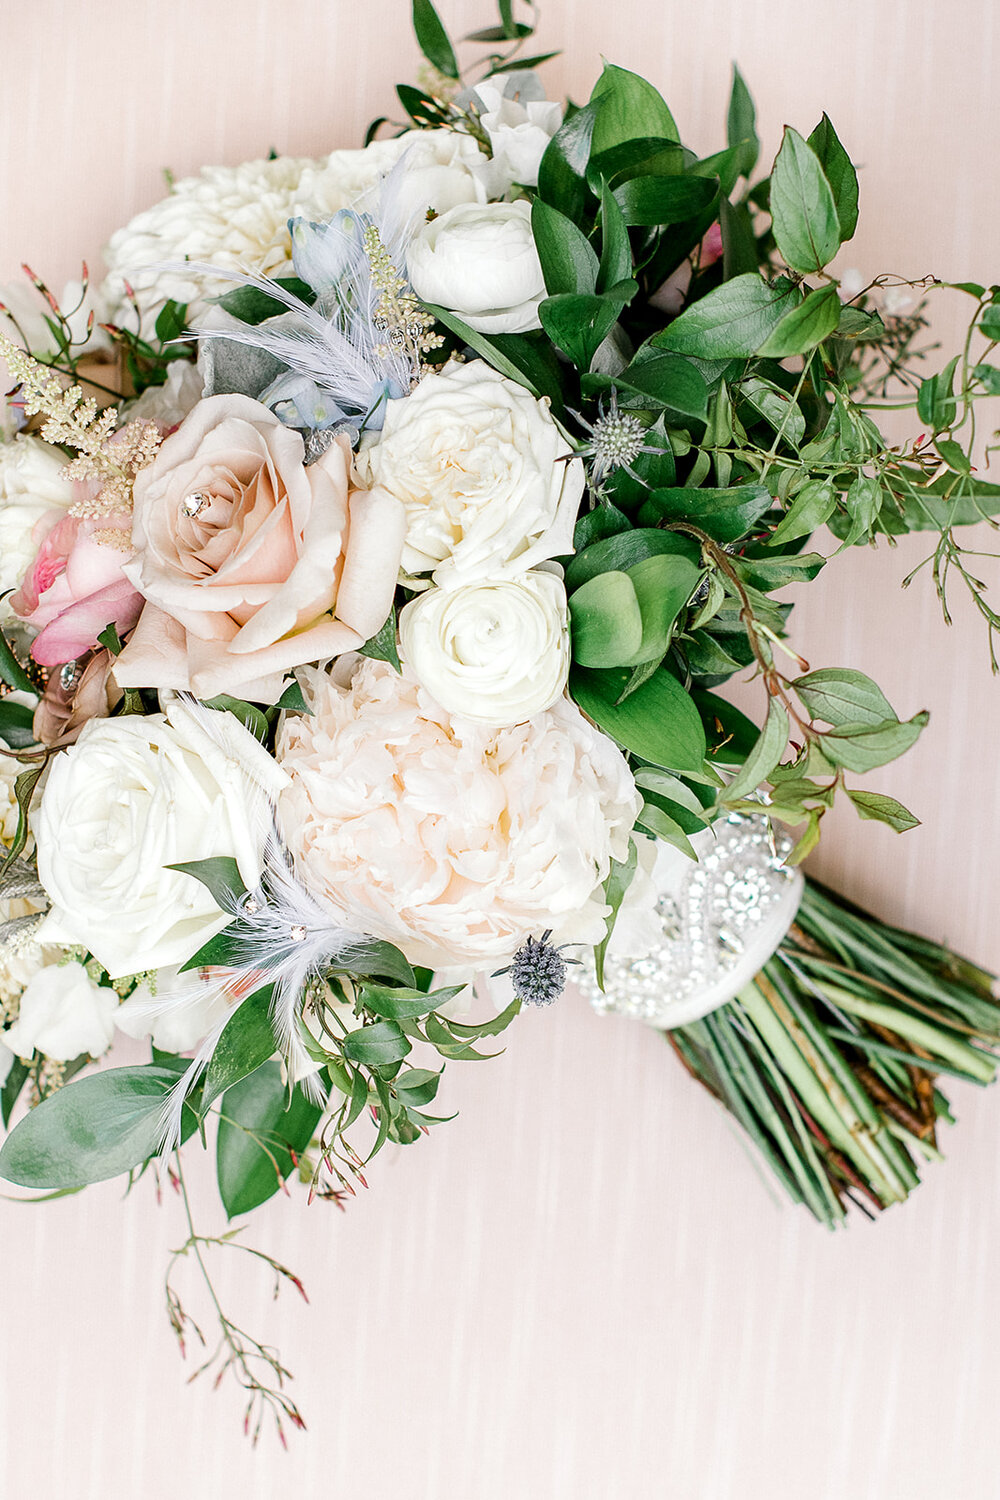 Violette-fleurs-roseville-napa-california-luxury-florist-silverado-resort-and-spa- weddings-by-scott-and-dana-bridal-bouquet.jpg